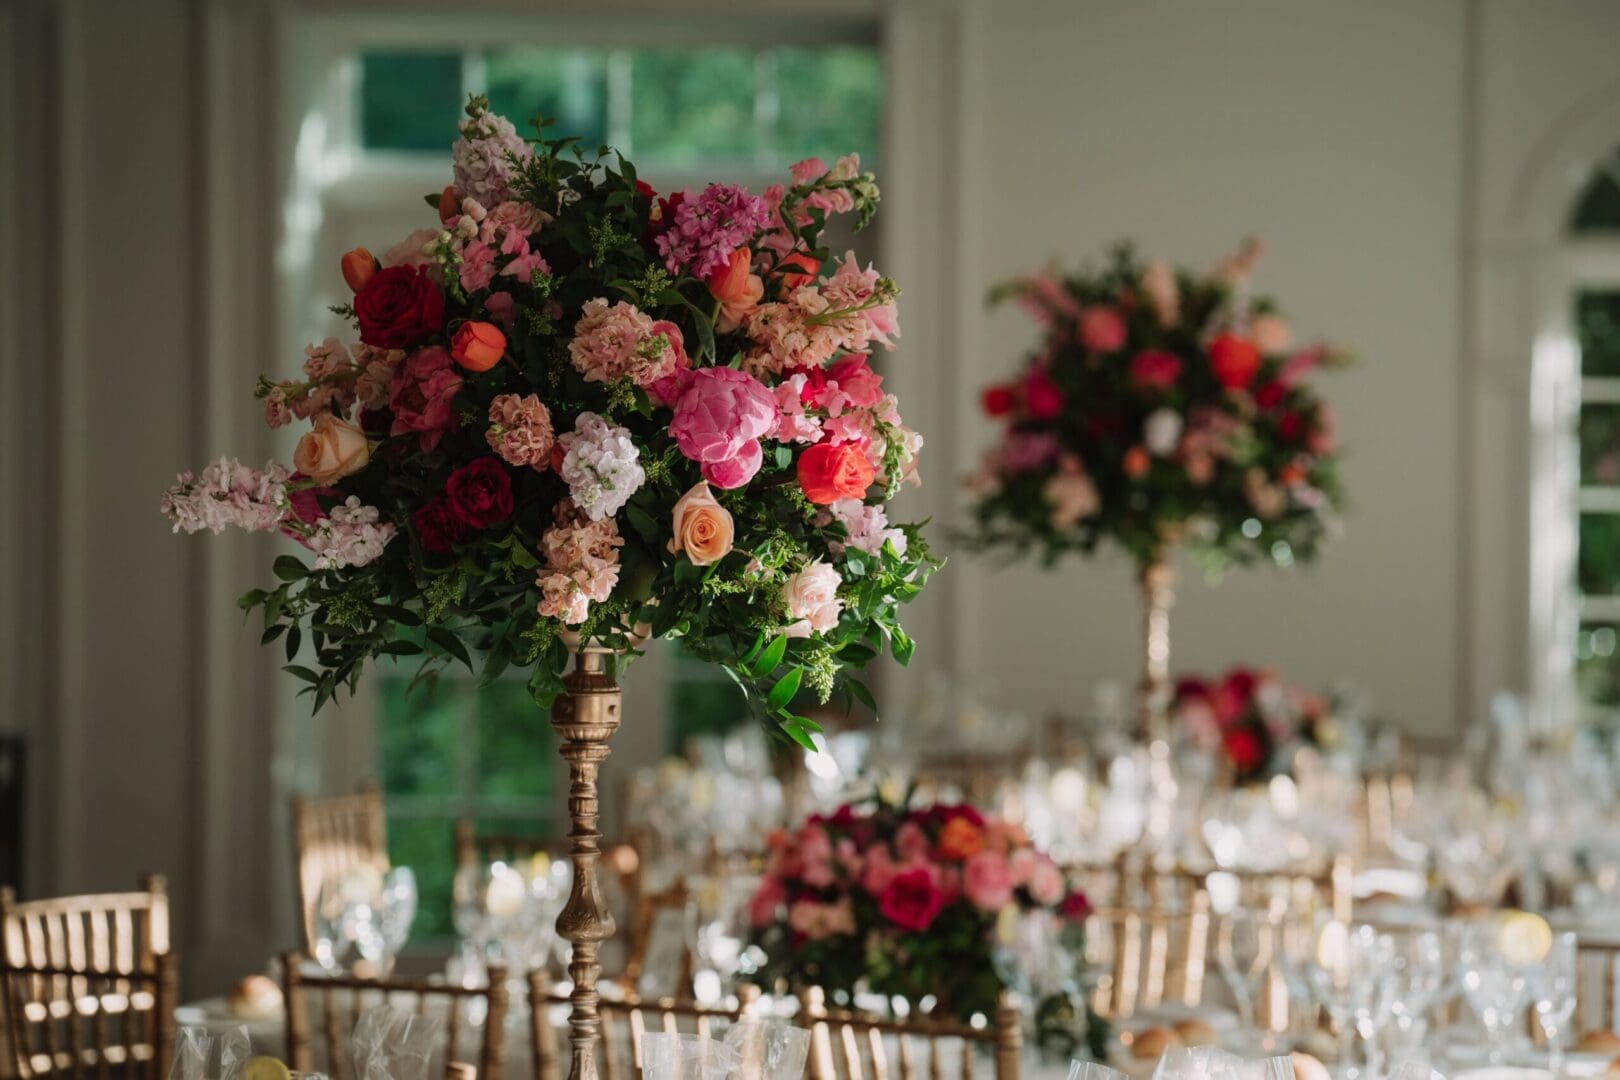 Beautiful floral centerpieces for a wedding reception, showcasing creative wedding tablescape ideas.